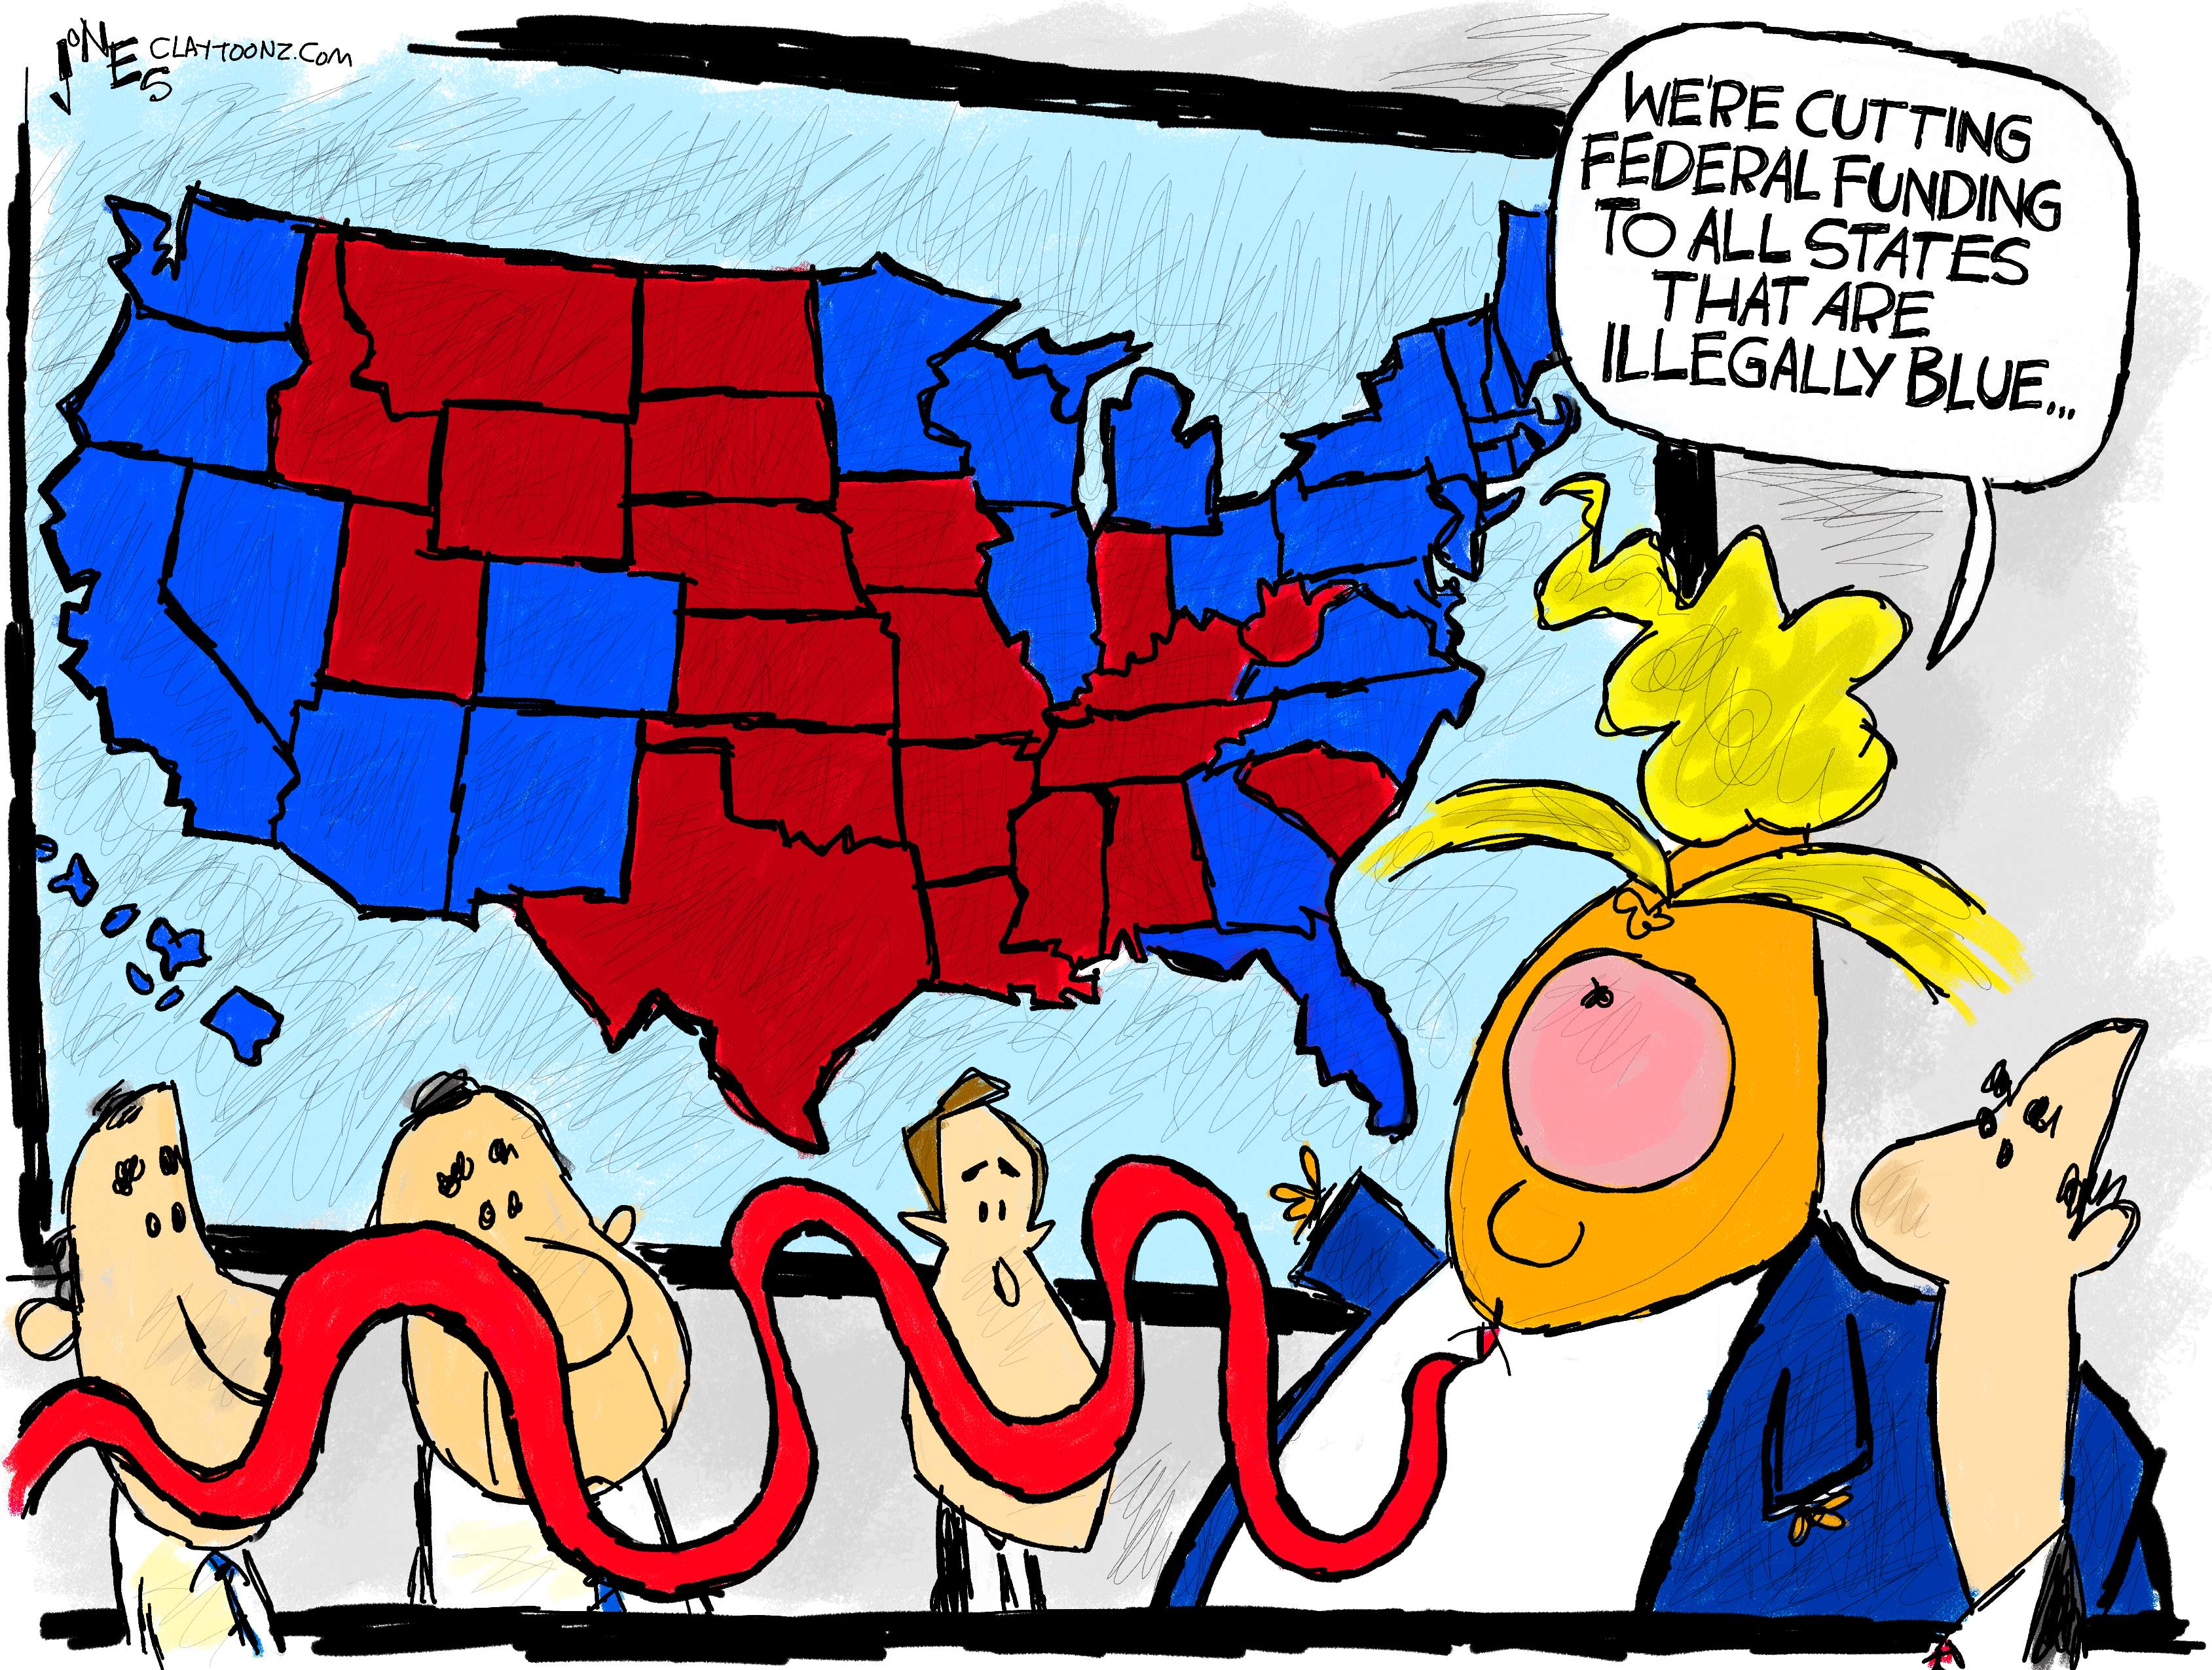 Political Cartoon U.S. Trump funding blue states